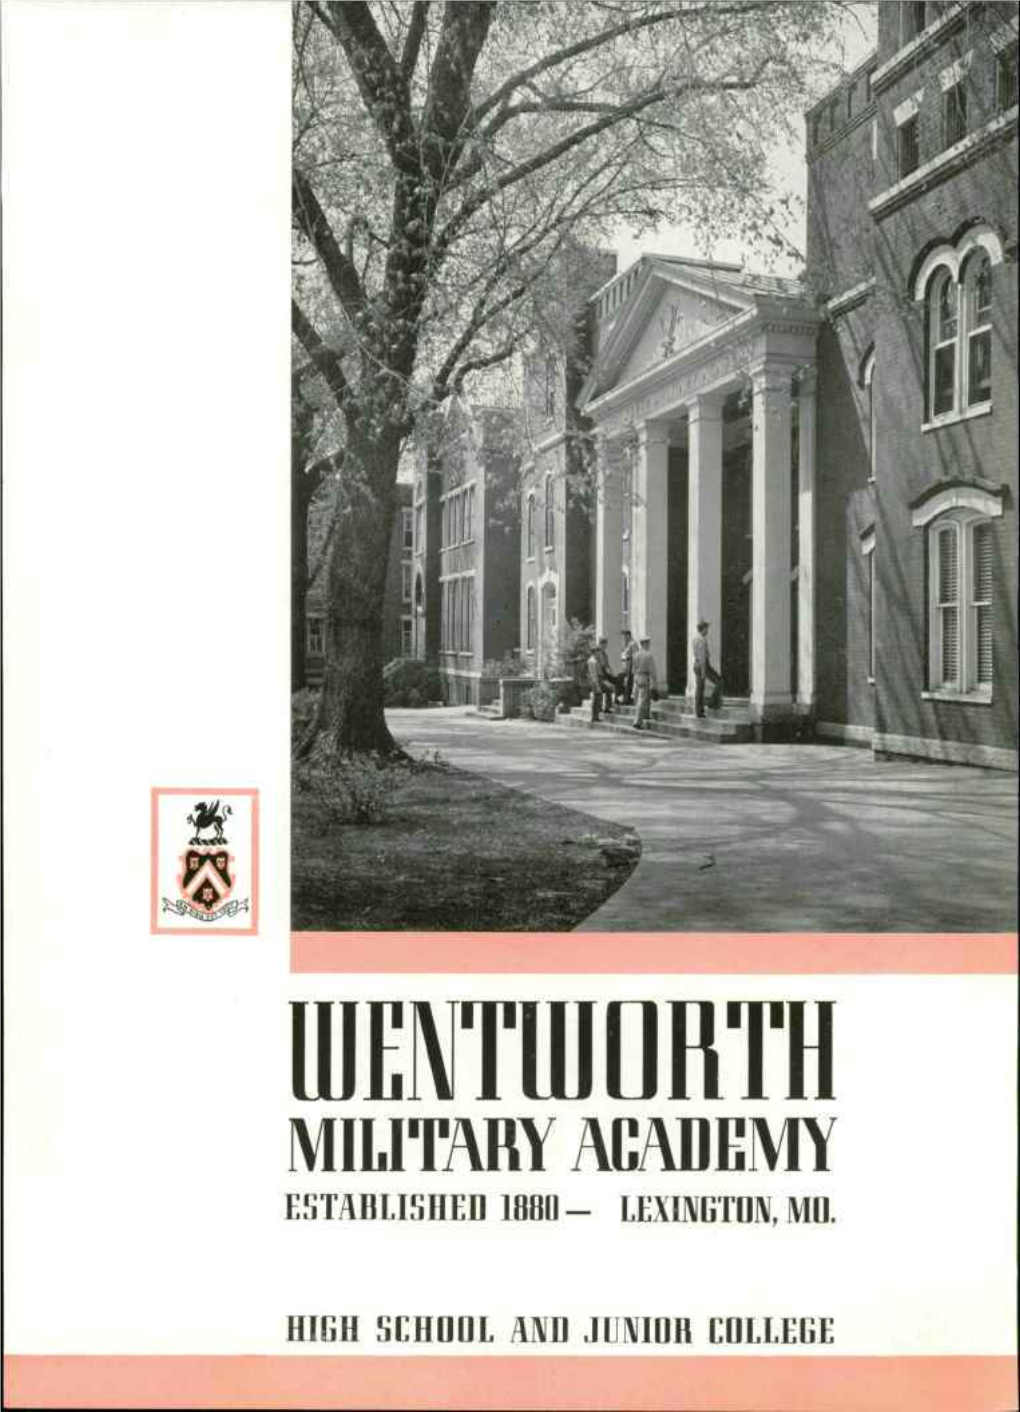 Military Academy Established 1888- Lexington, Mo